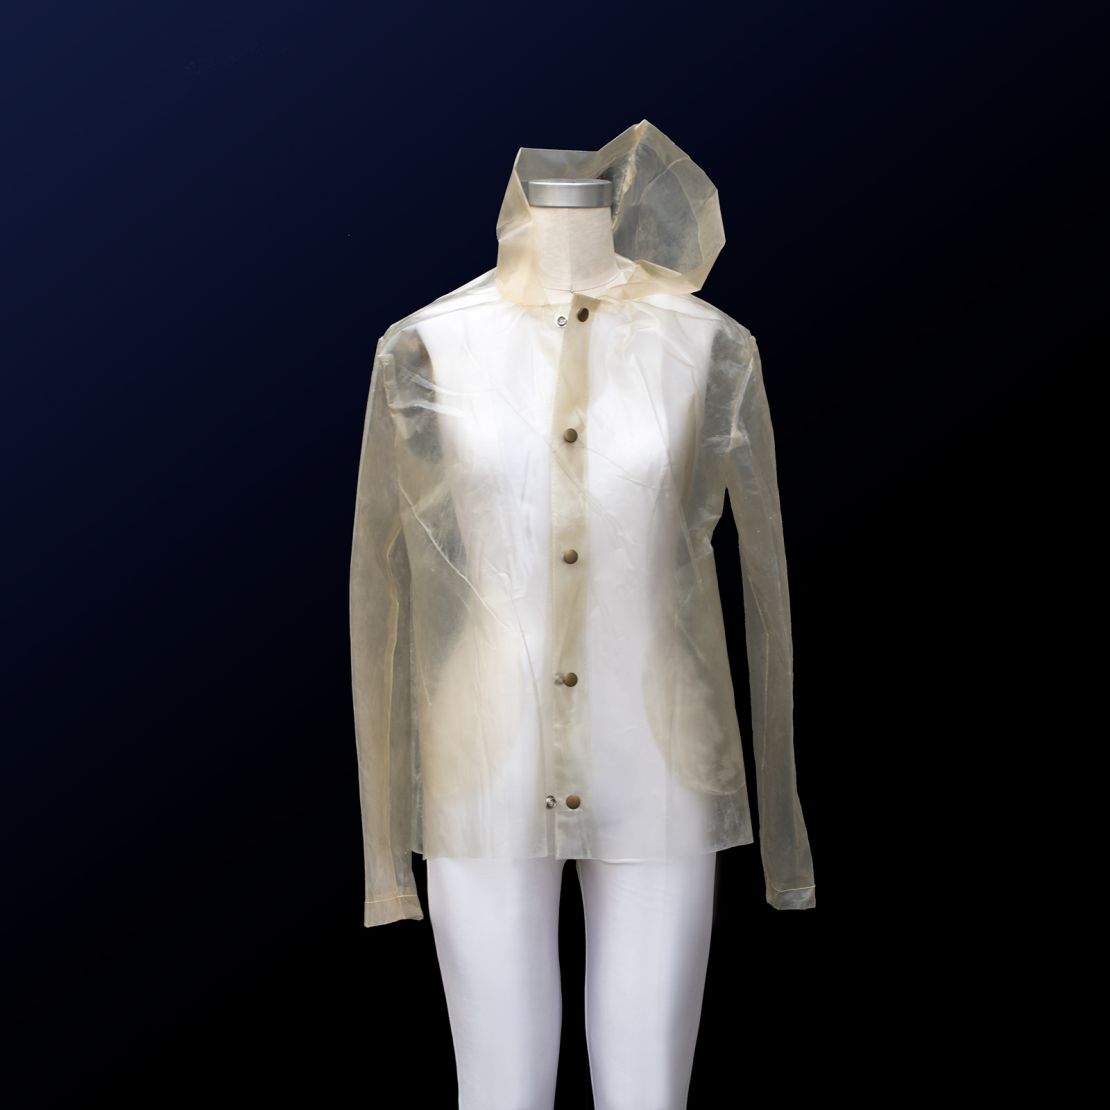 Fabric of the future? Charlotte McCurdy has developed a plastic-like fabric made of algae and fashioned it into a raincoat.